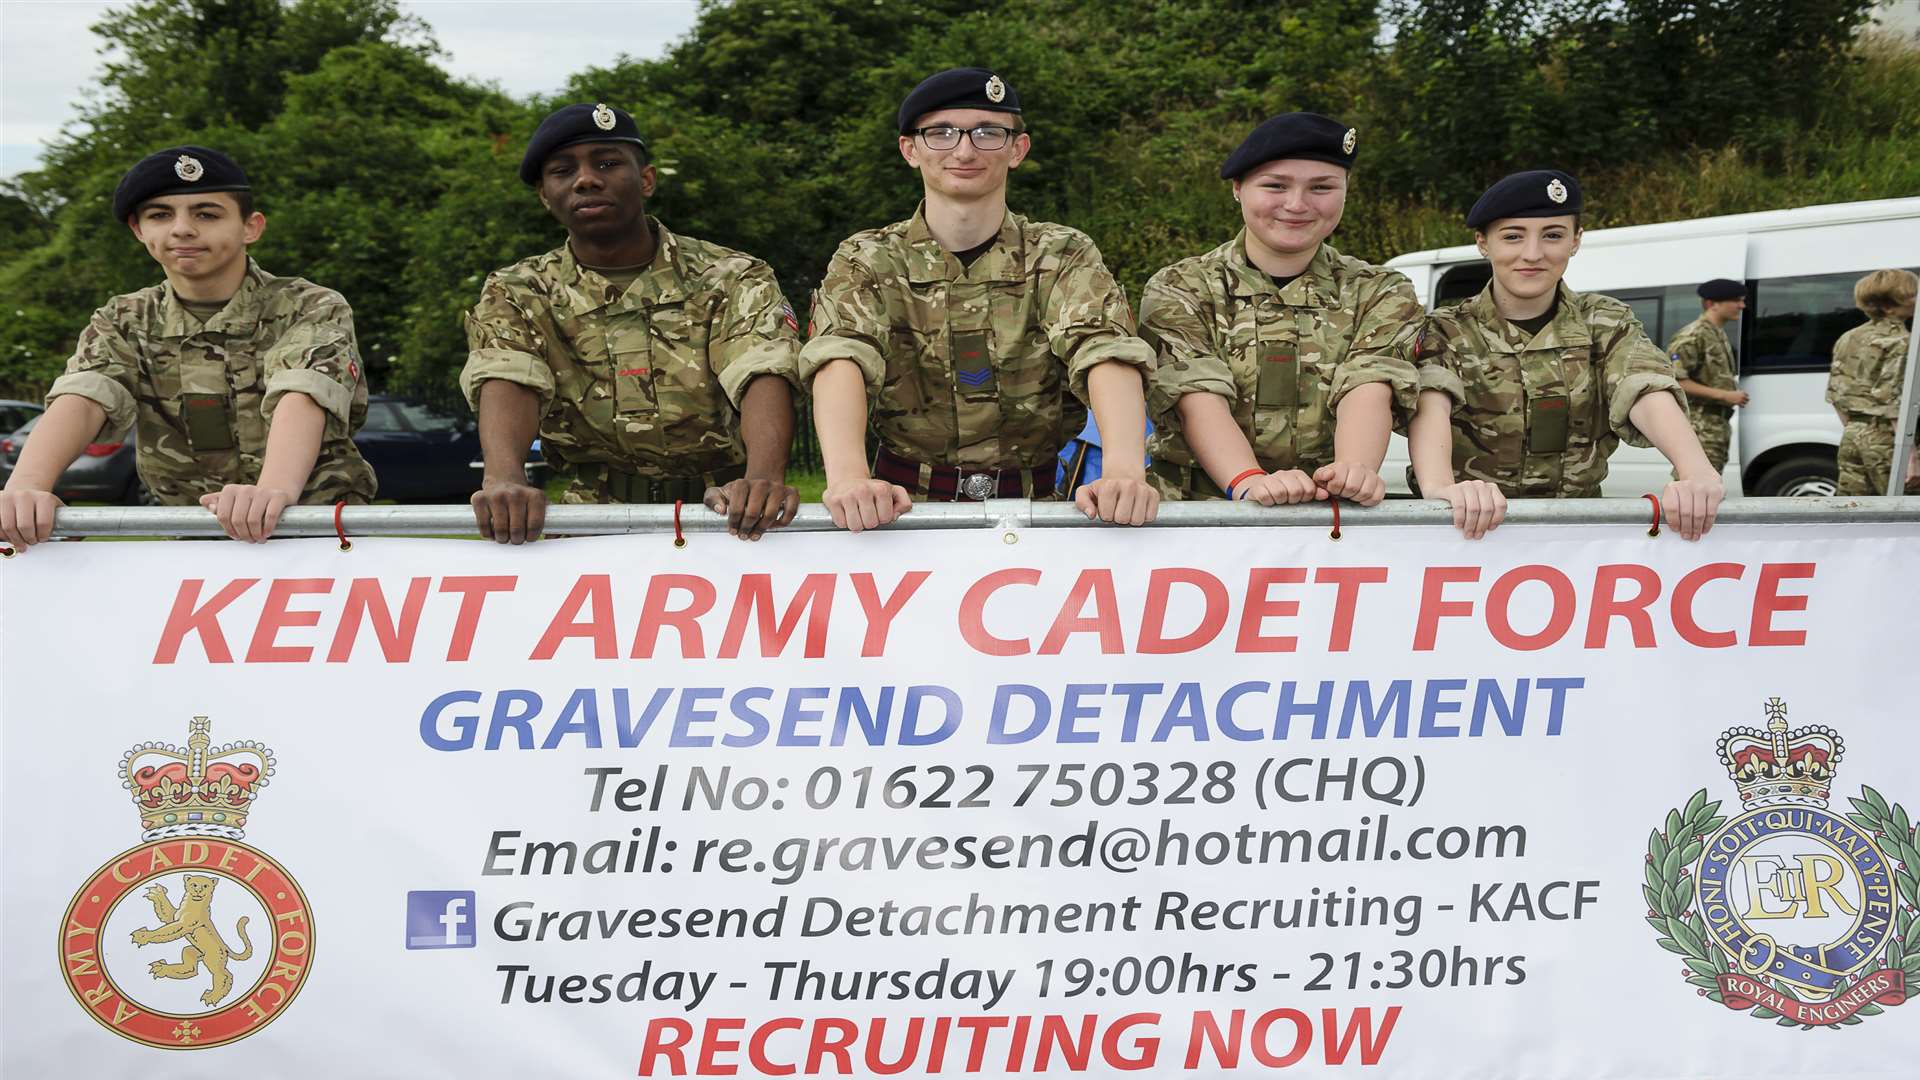 Members of the Gravesend detachment, Kent Army Cadet Force. The 170th Gravesend Town Regatta, on Gordon Promenade, Gravesend.